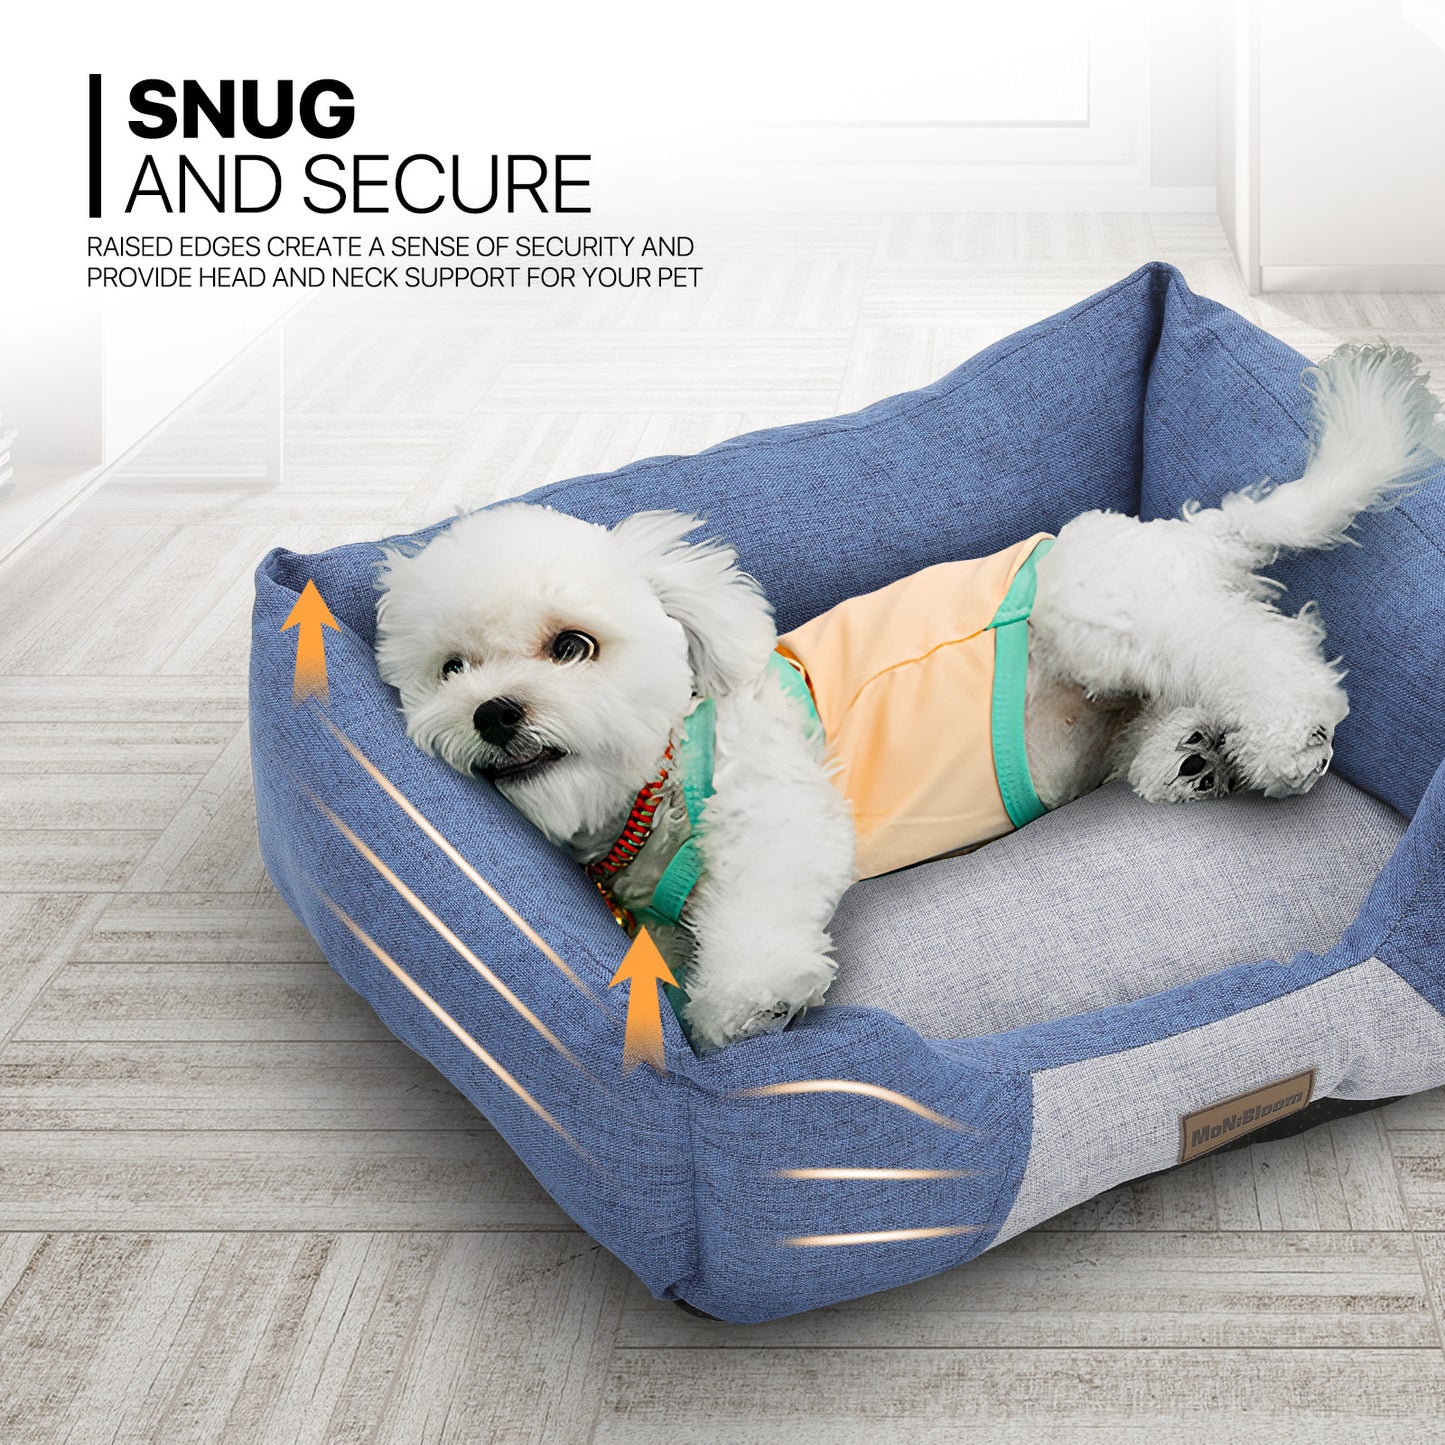 Pet Bed - Rectangle - 20'' Length - Linen-like - Machine Washable